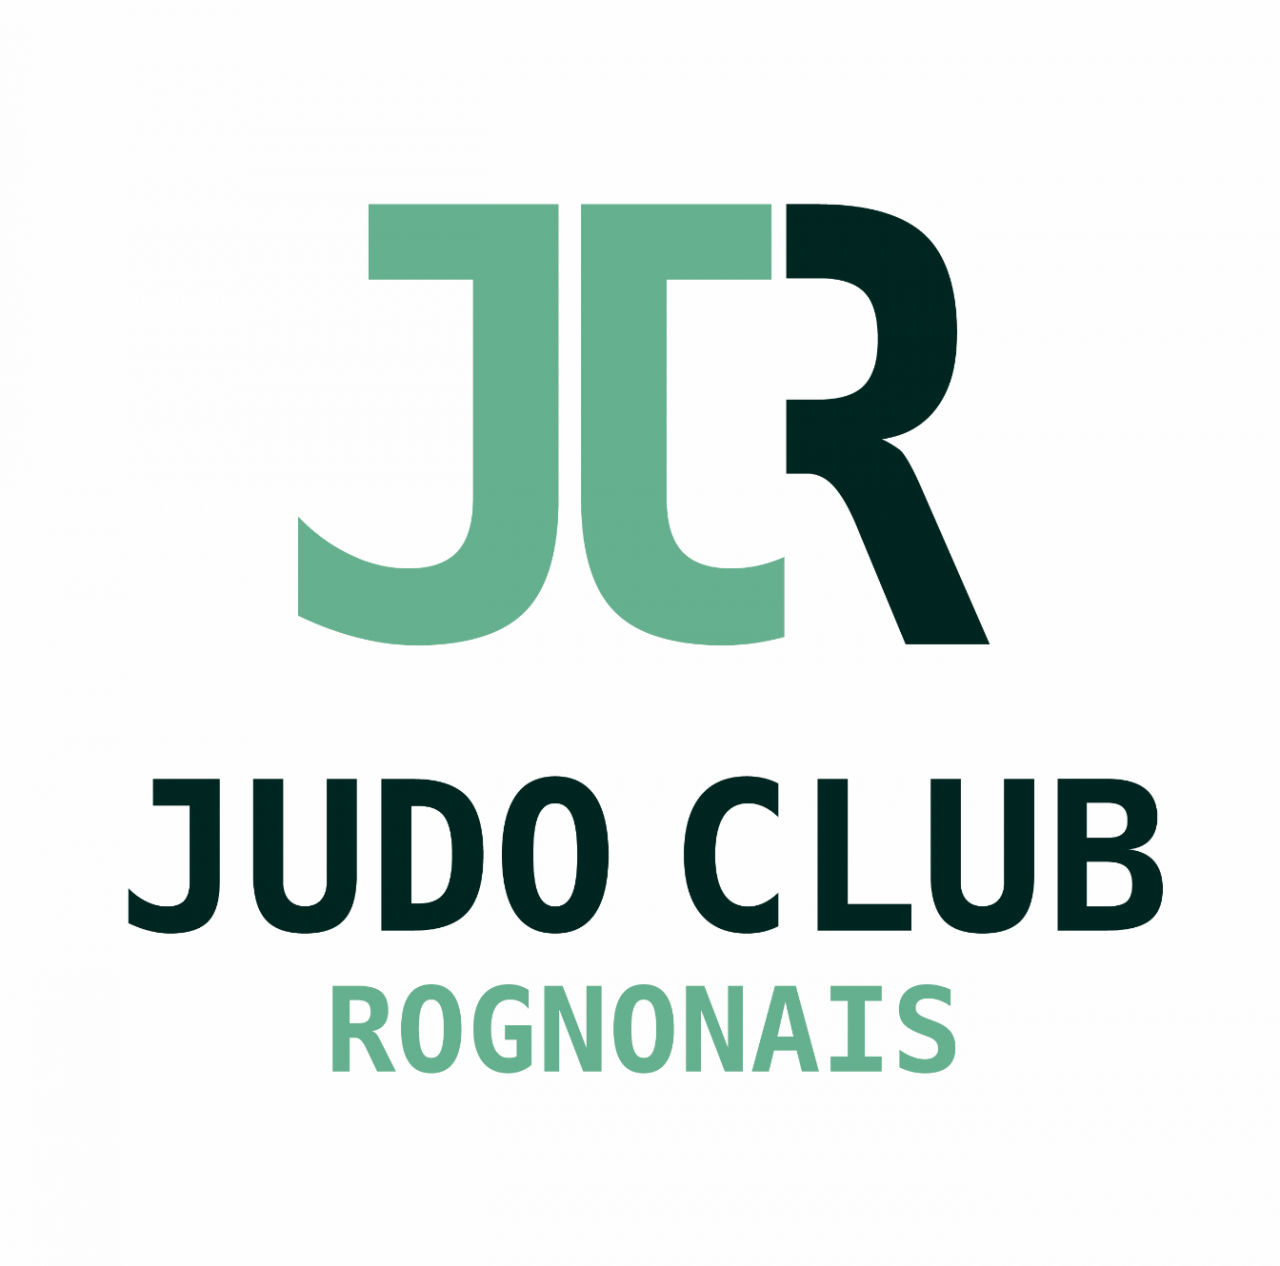 JUDO CLUB ROGNONAIS